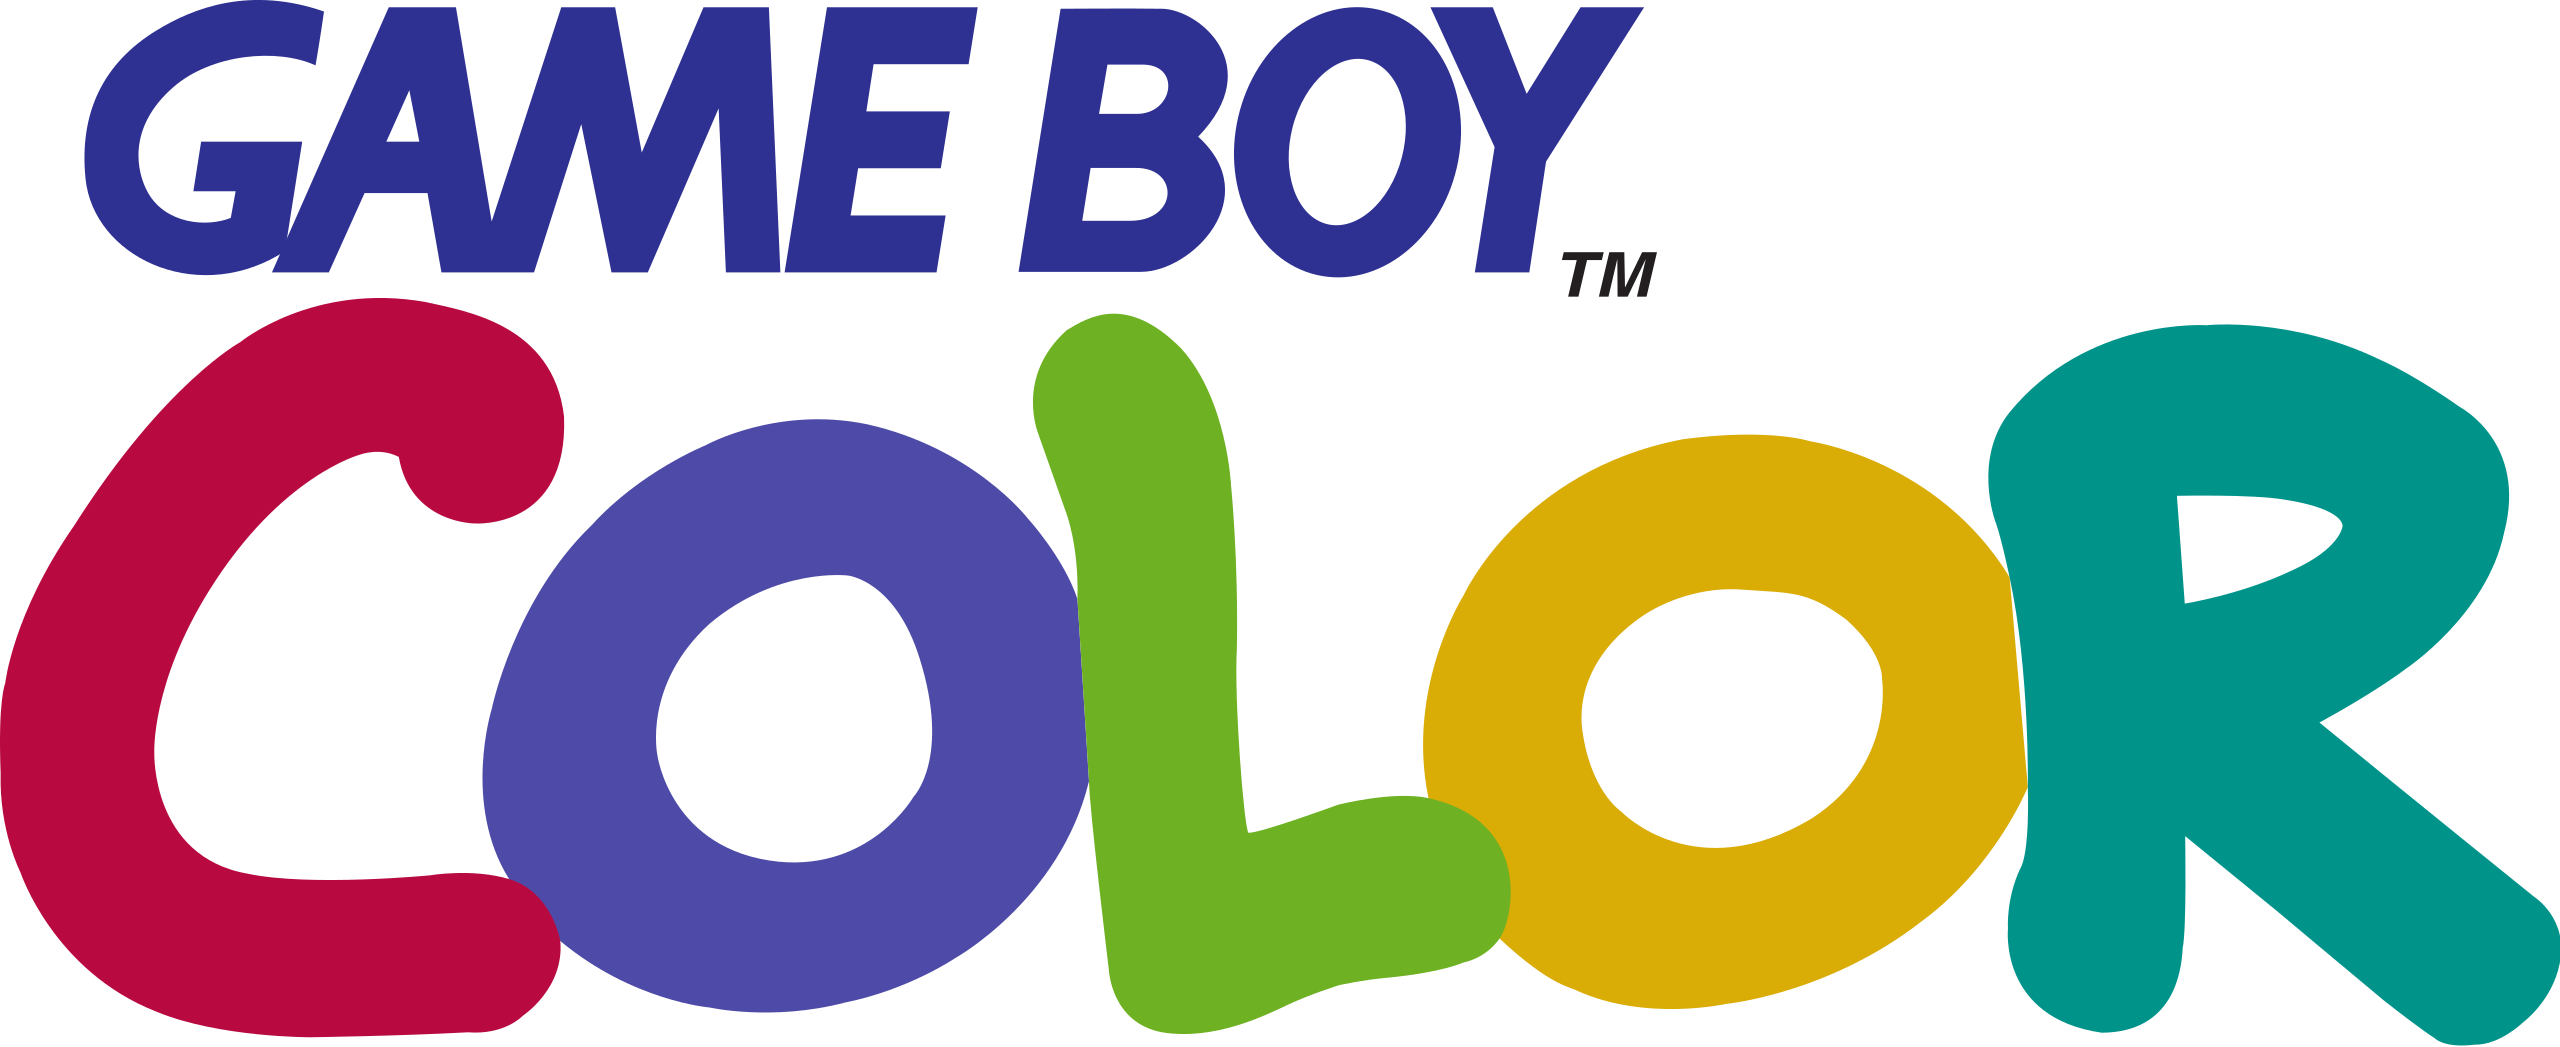 Nintendo Game Boy Color